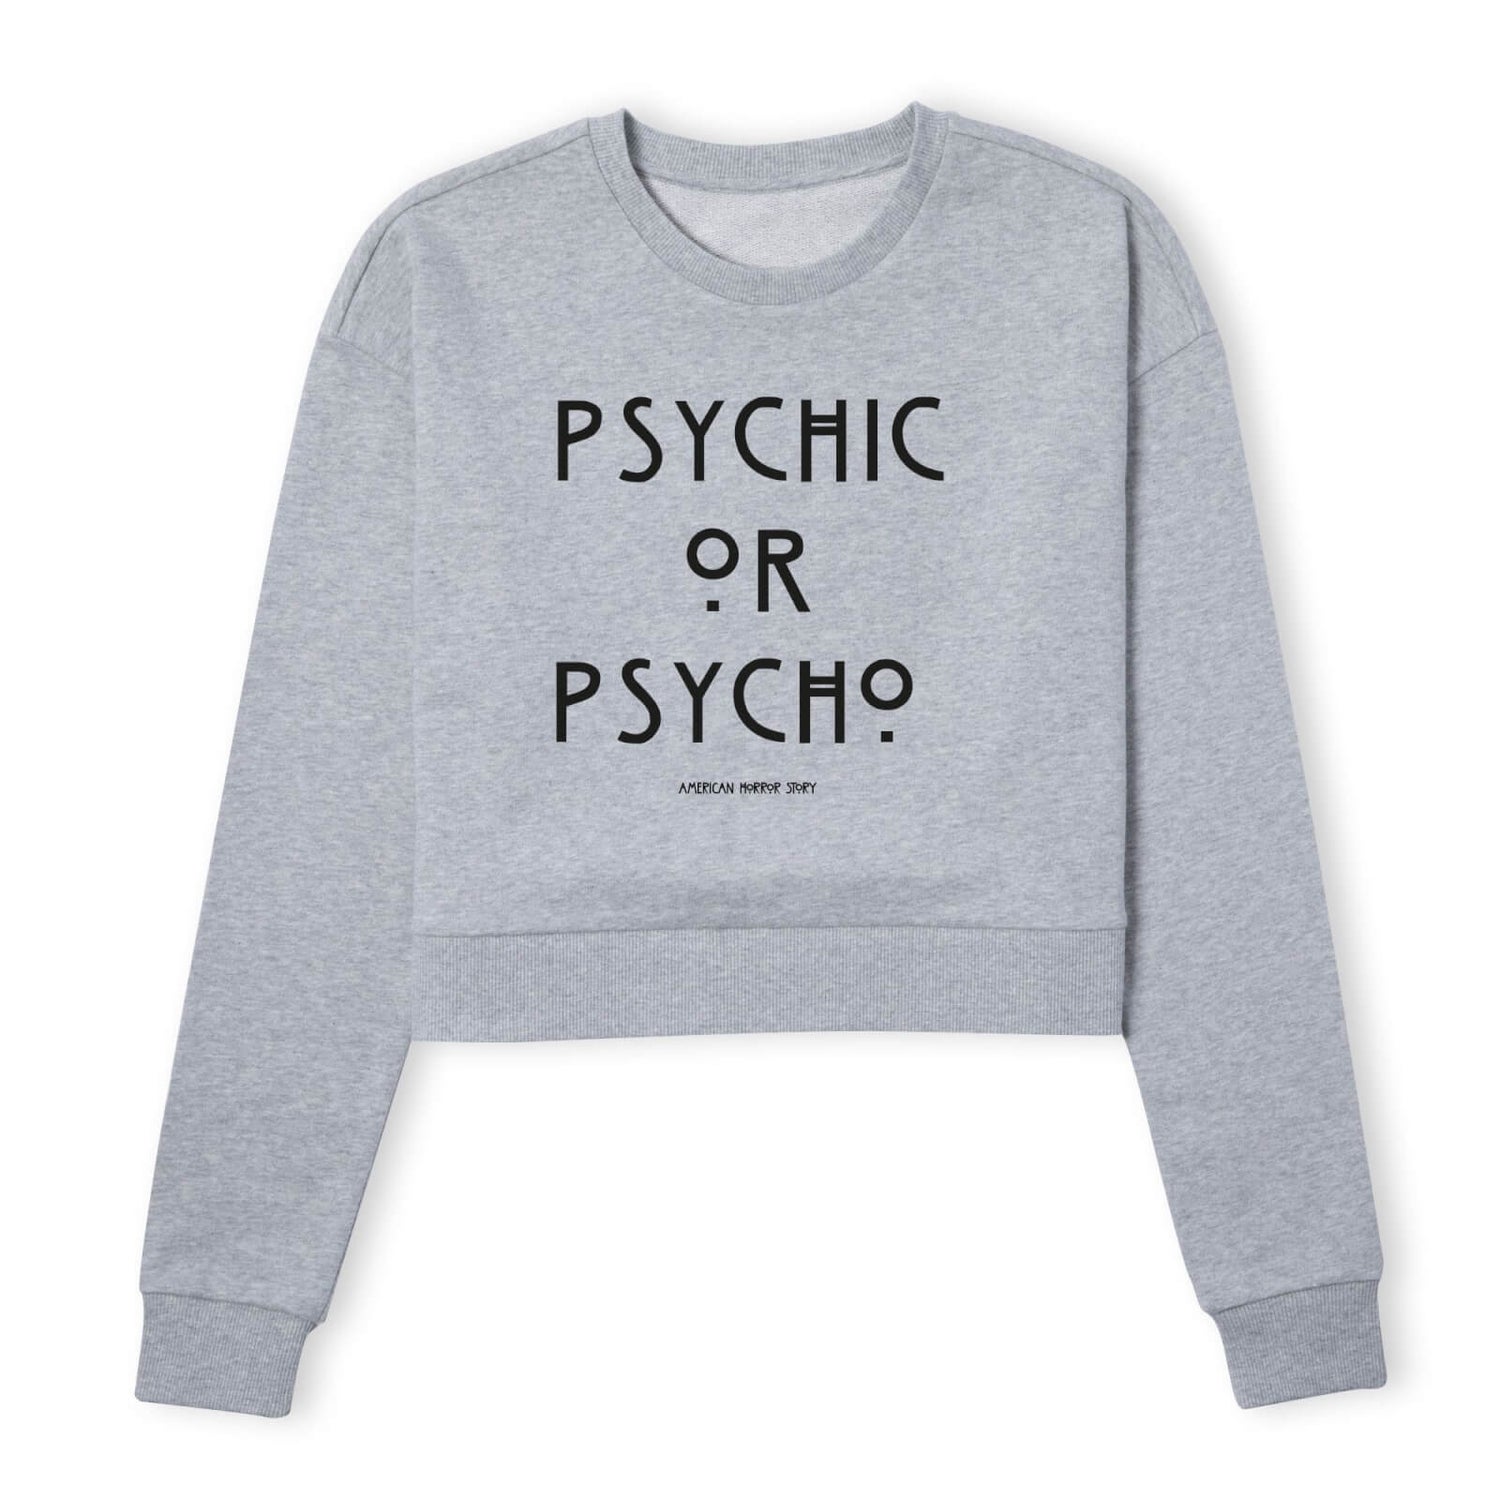 American Horror Story Psychic Or Psycho Women's Cropped Sweatshirt - Grey